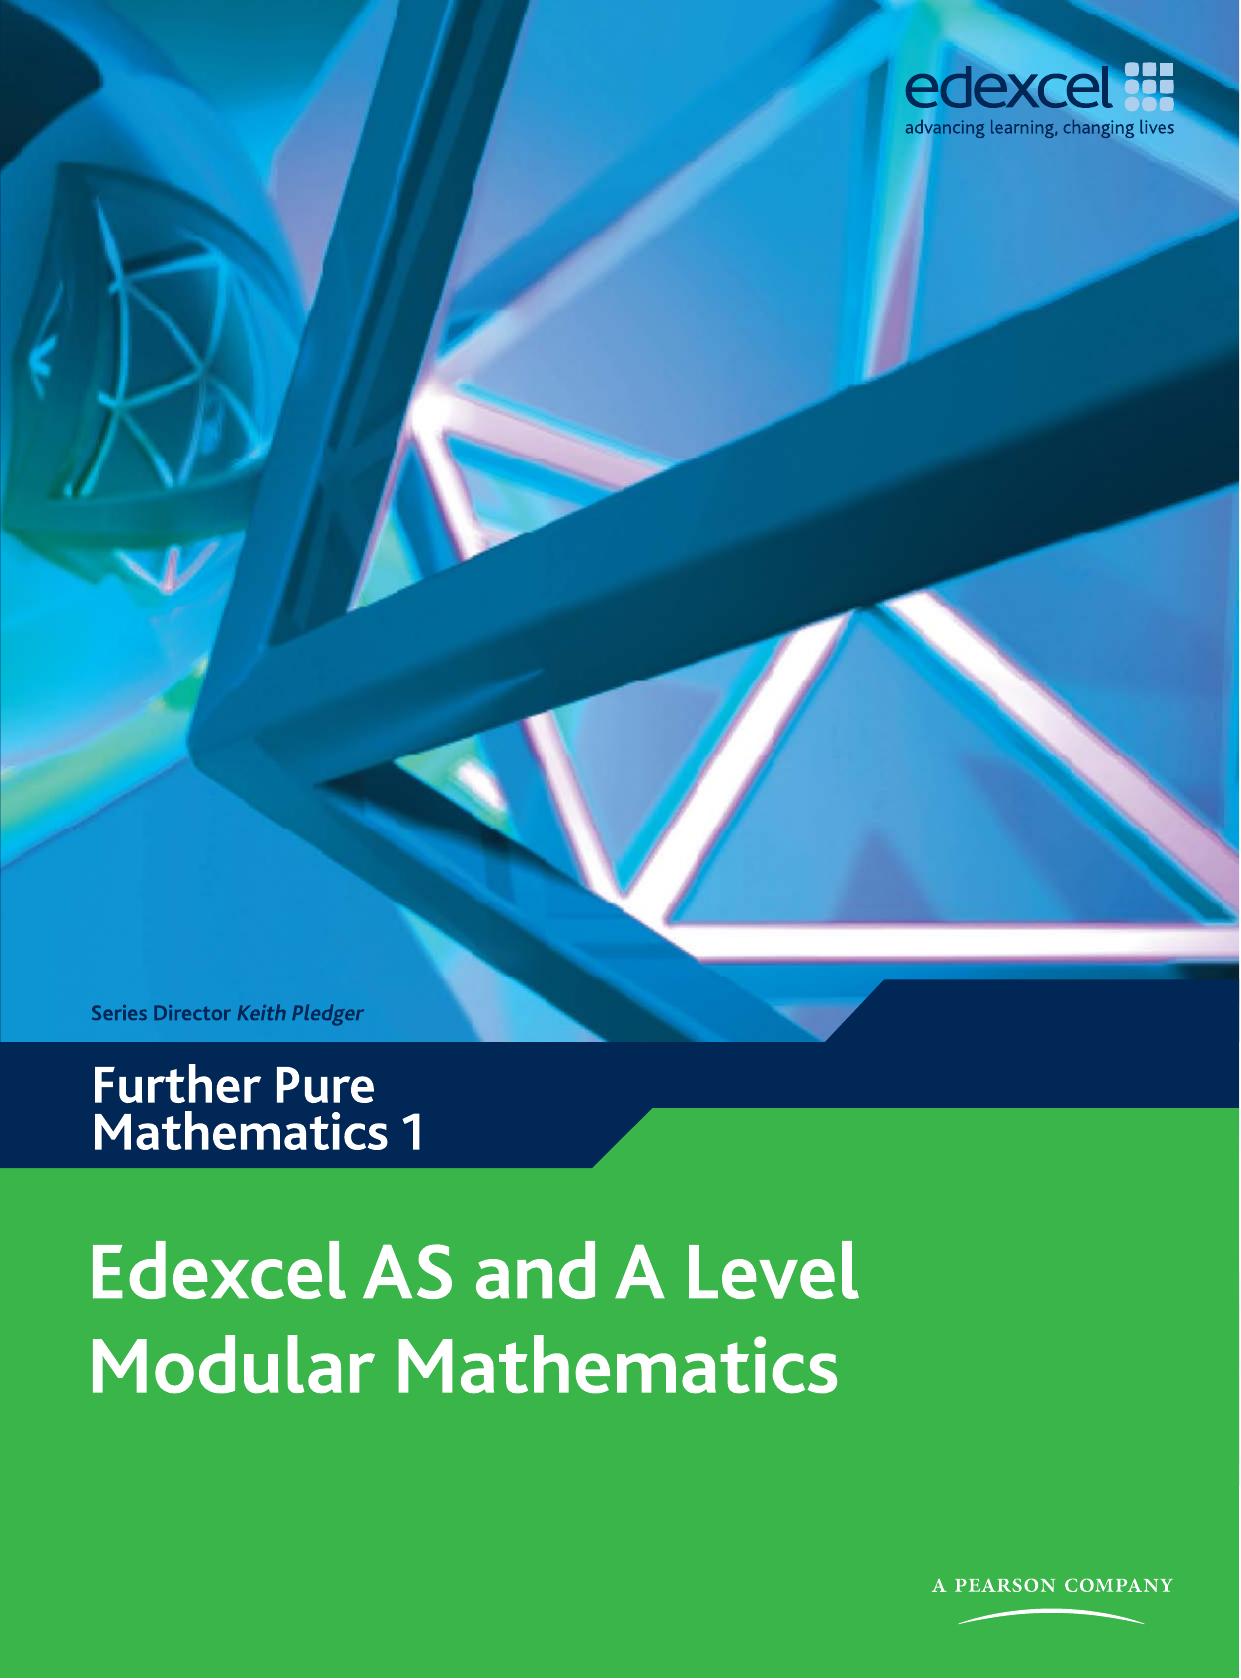 Edexcel AS and A level Modular Mathematics - Further Pure Mathematics 1